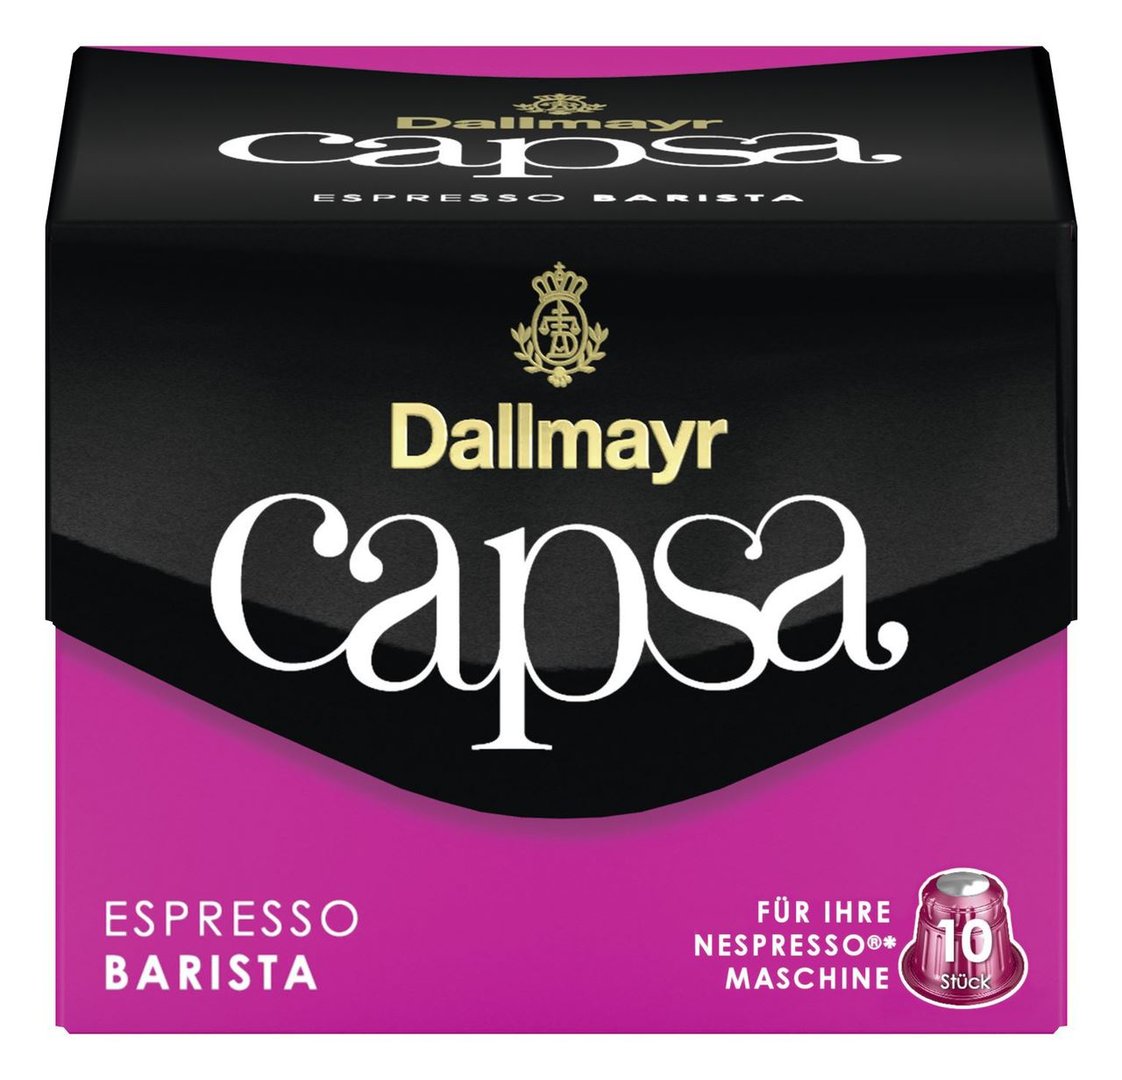 Dallmayr - Capsa Espresso Barista 10 Kapseln - 56 g Packung